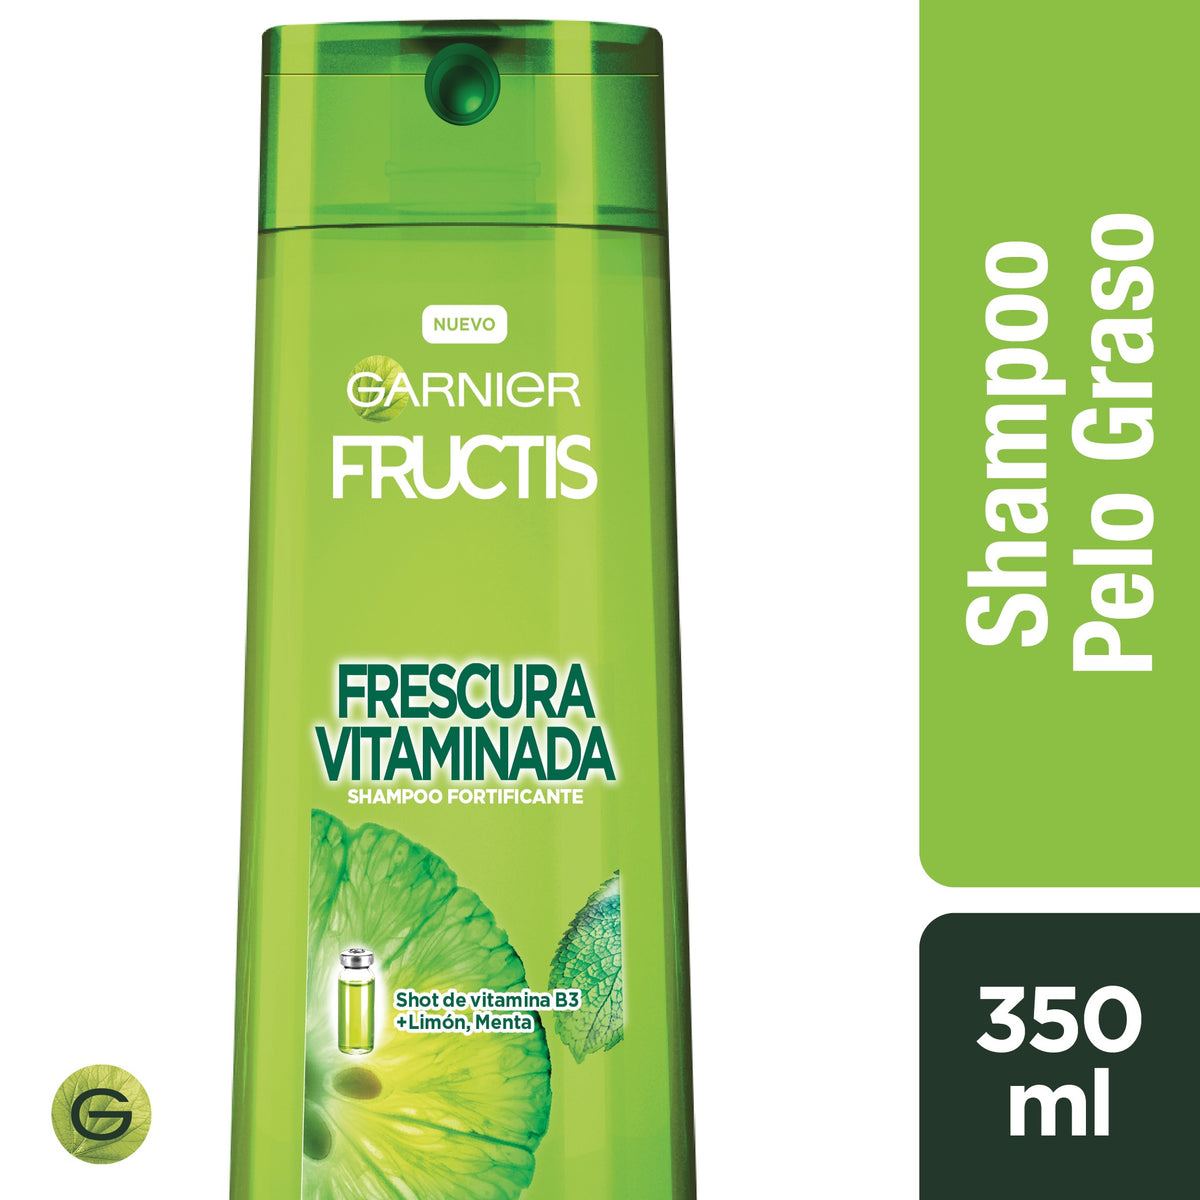 Fructis Frescura Vitaminado Sh 350 ml